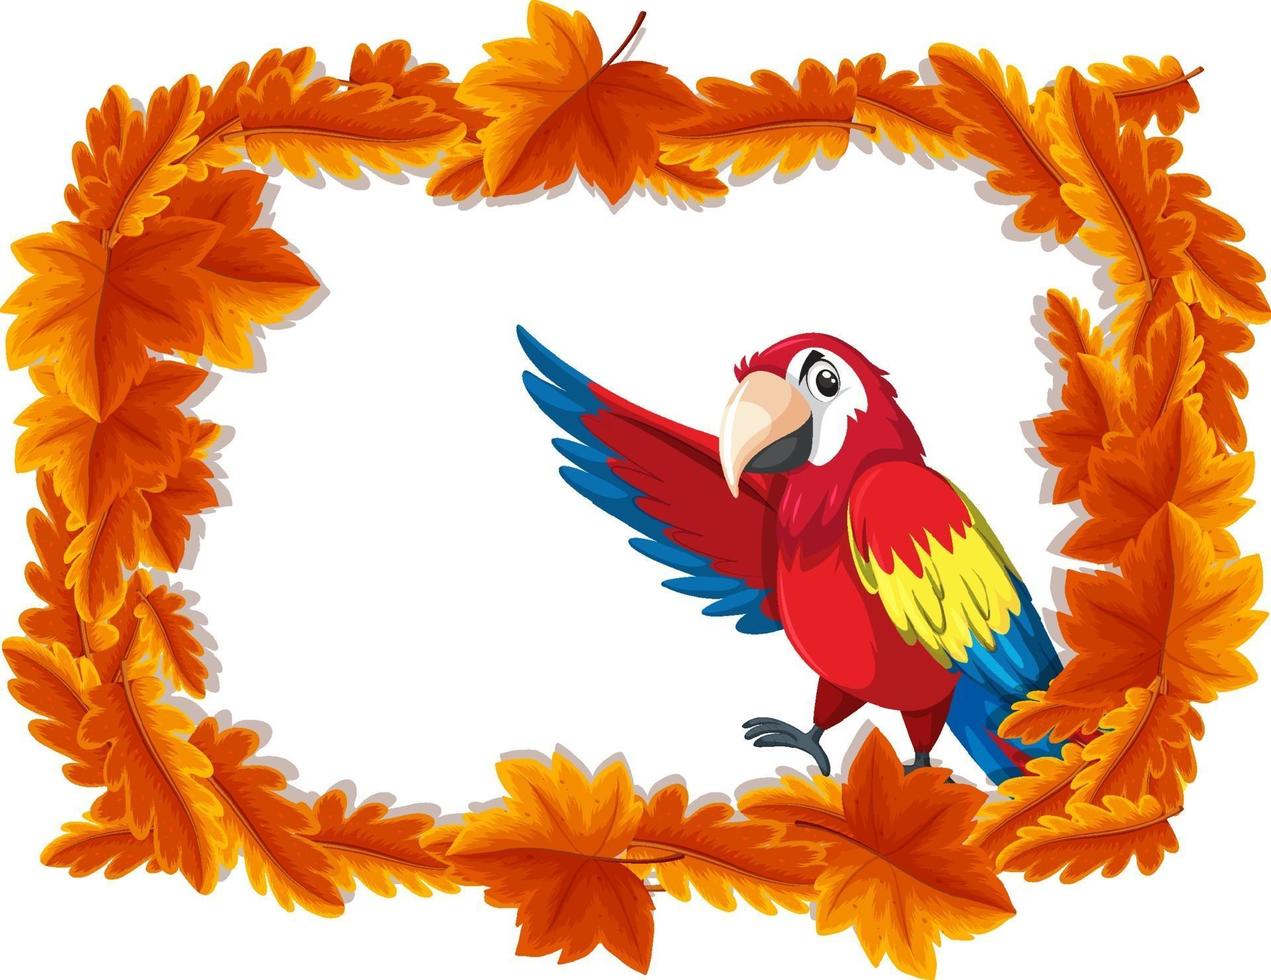 röda blad banner mall med papegoja fågel seriefigur vektor